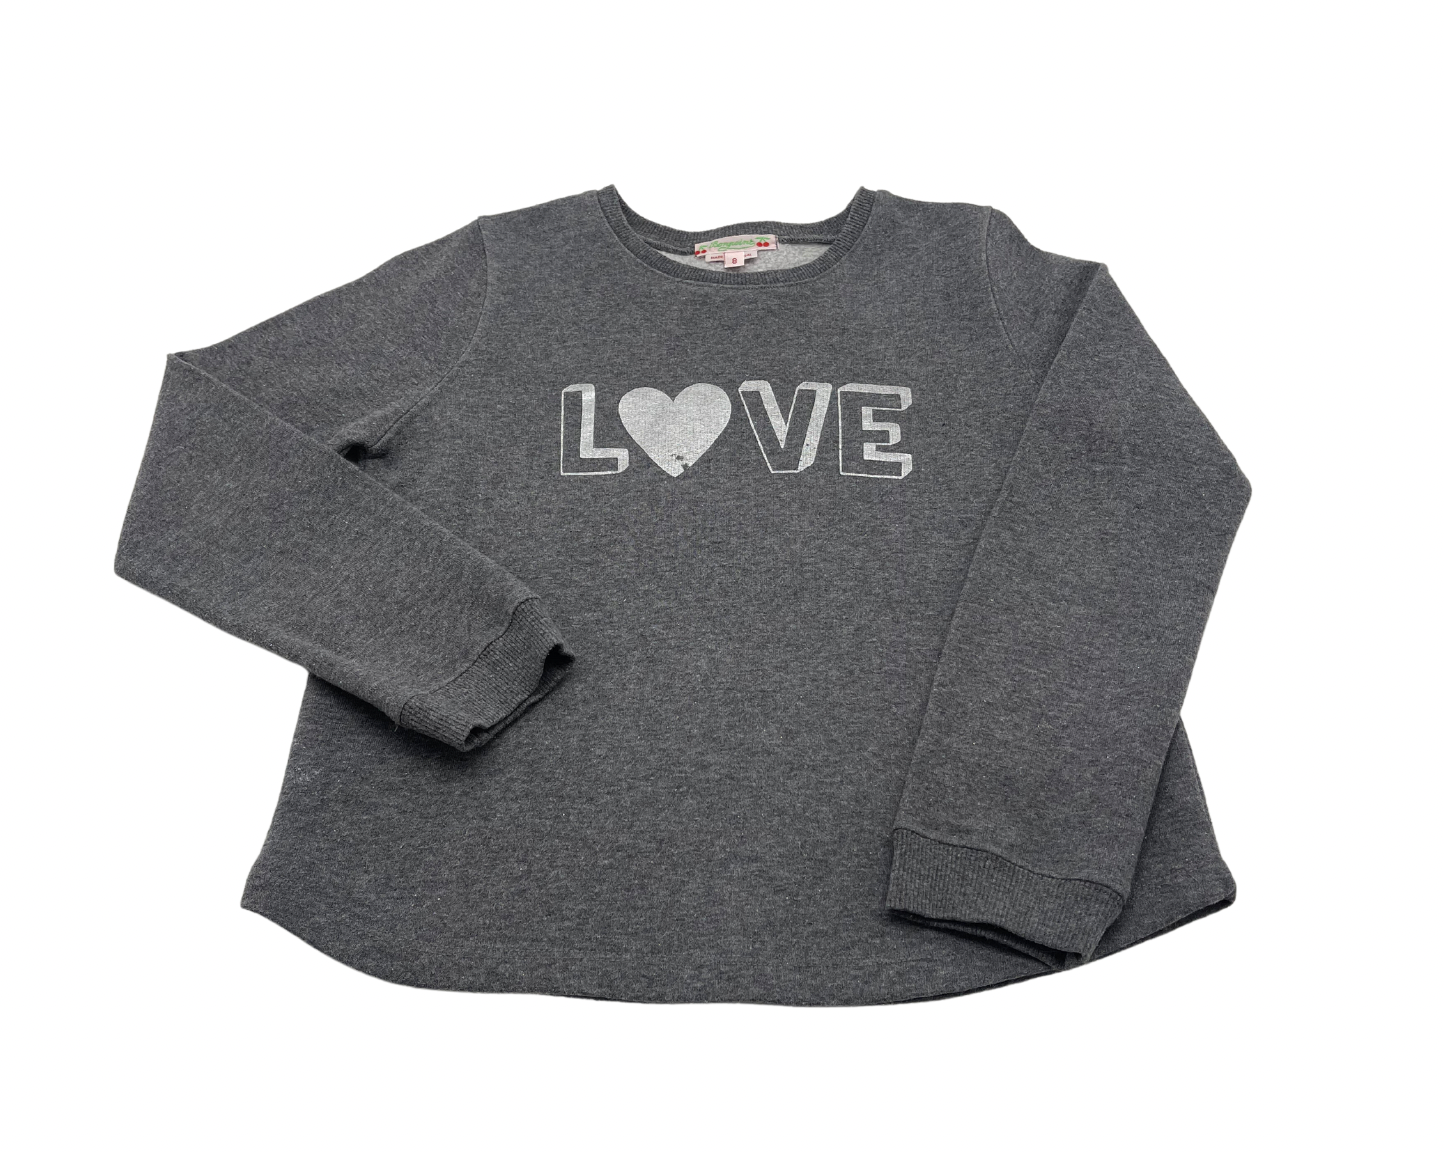 BONPOINT - Love sweatshirt - 8 years old